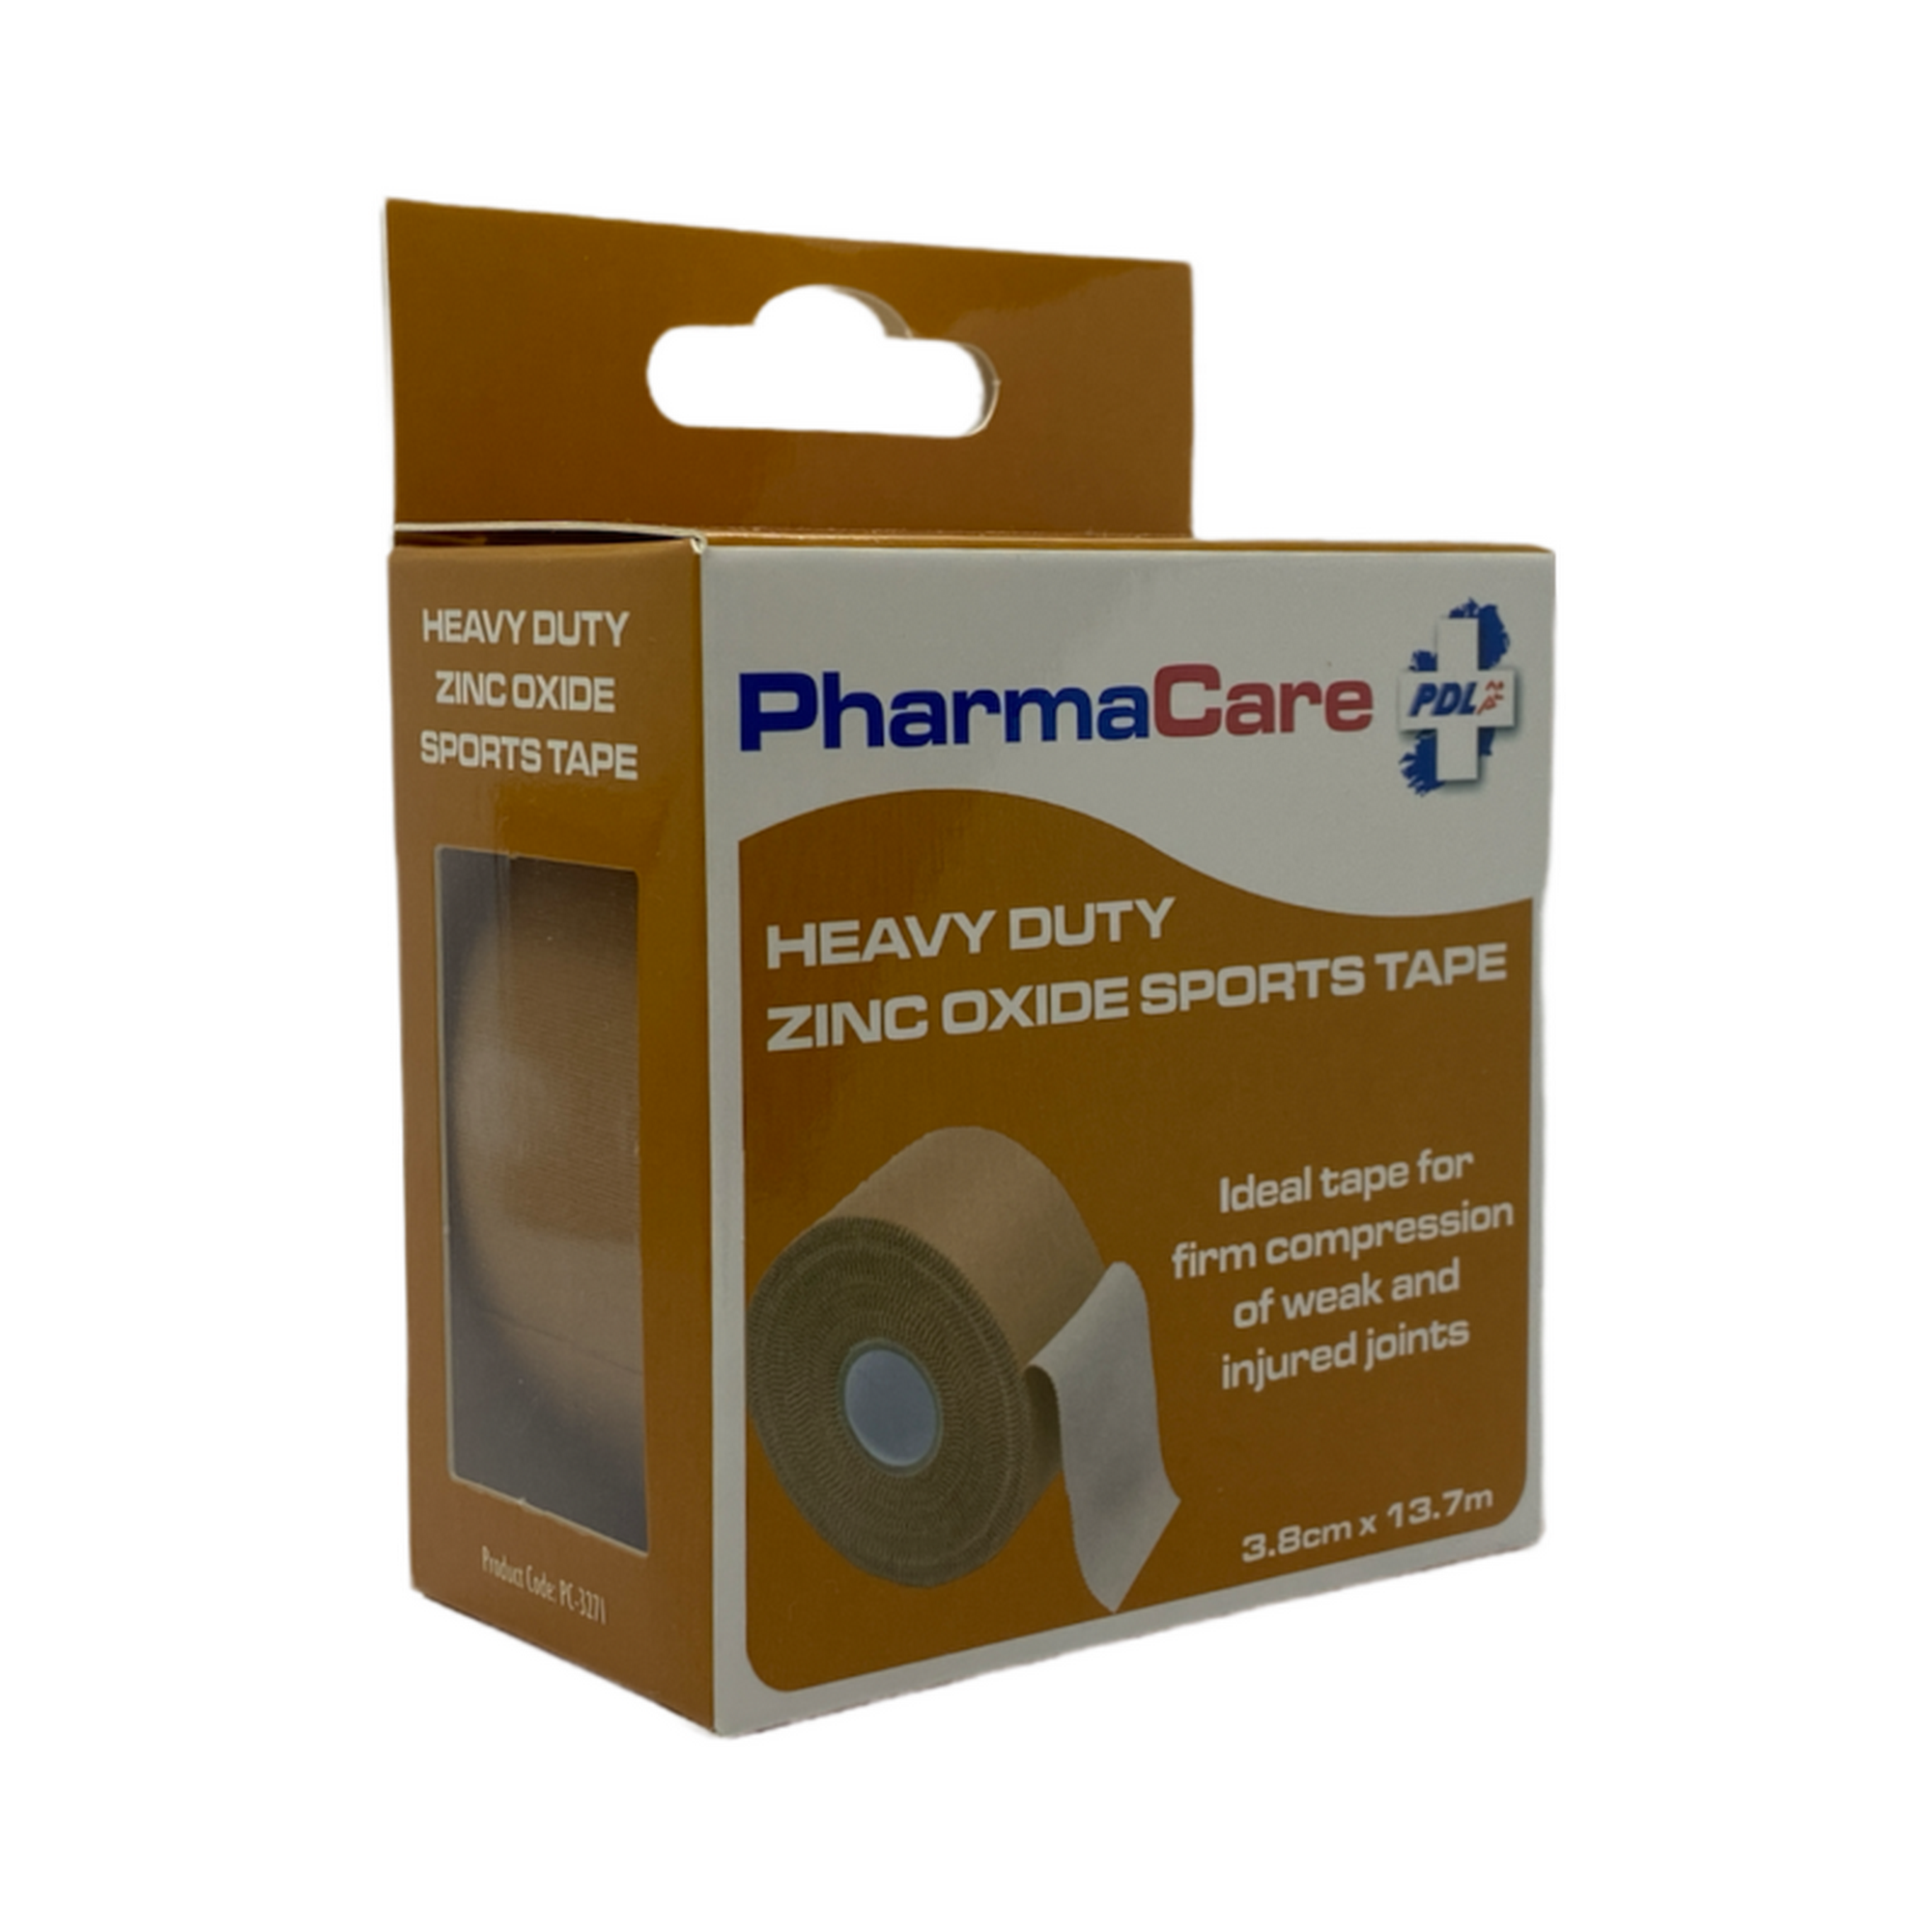 Pharmacare Heavy Duty Zinc Oxide Sports Tape 3.8cm X 13.7m